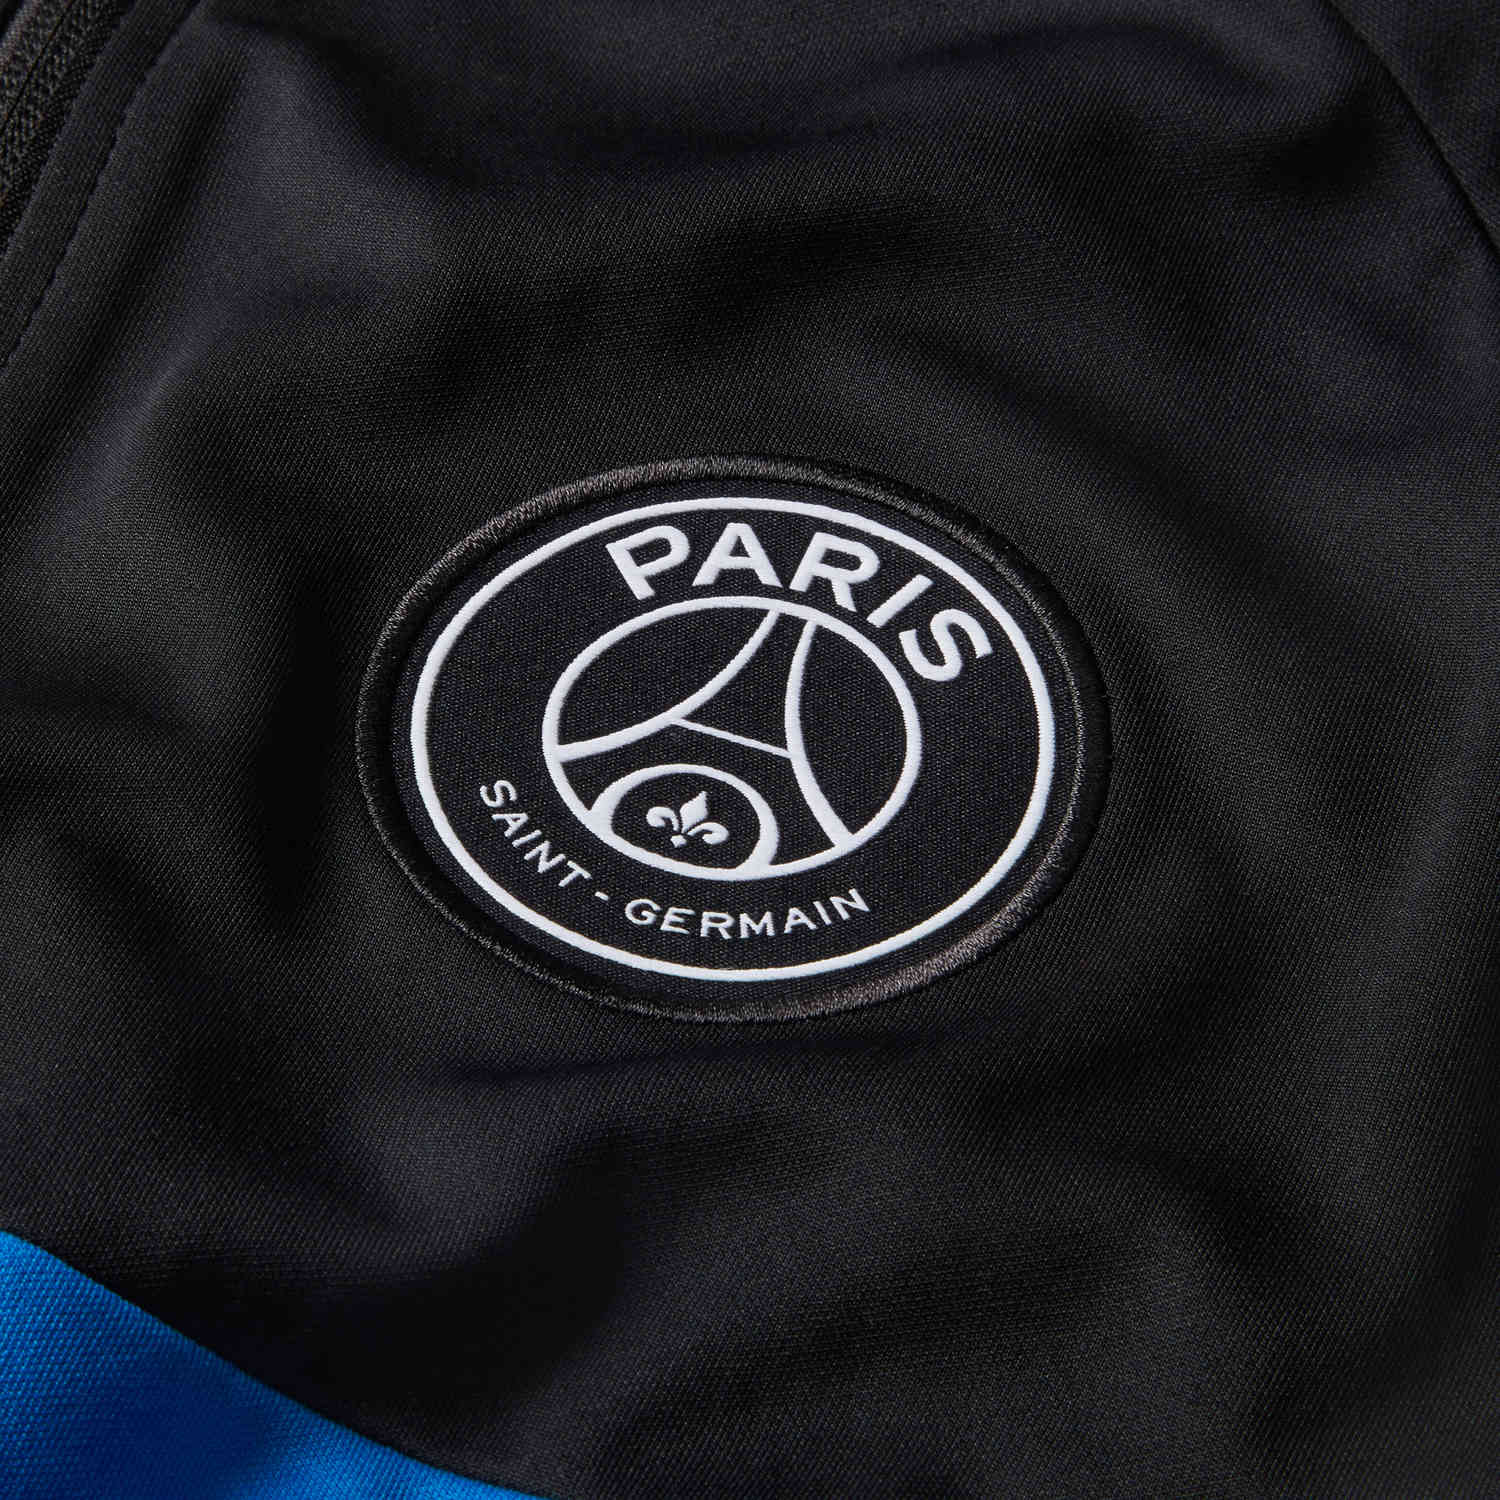 Psg Logo Black And White : Nike Jordan X Psg Paris Saint Germain Black ...